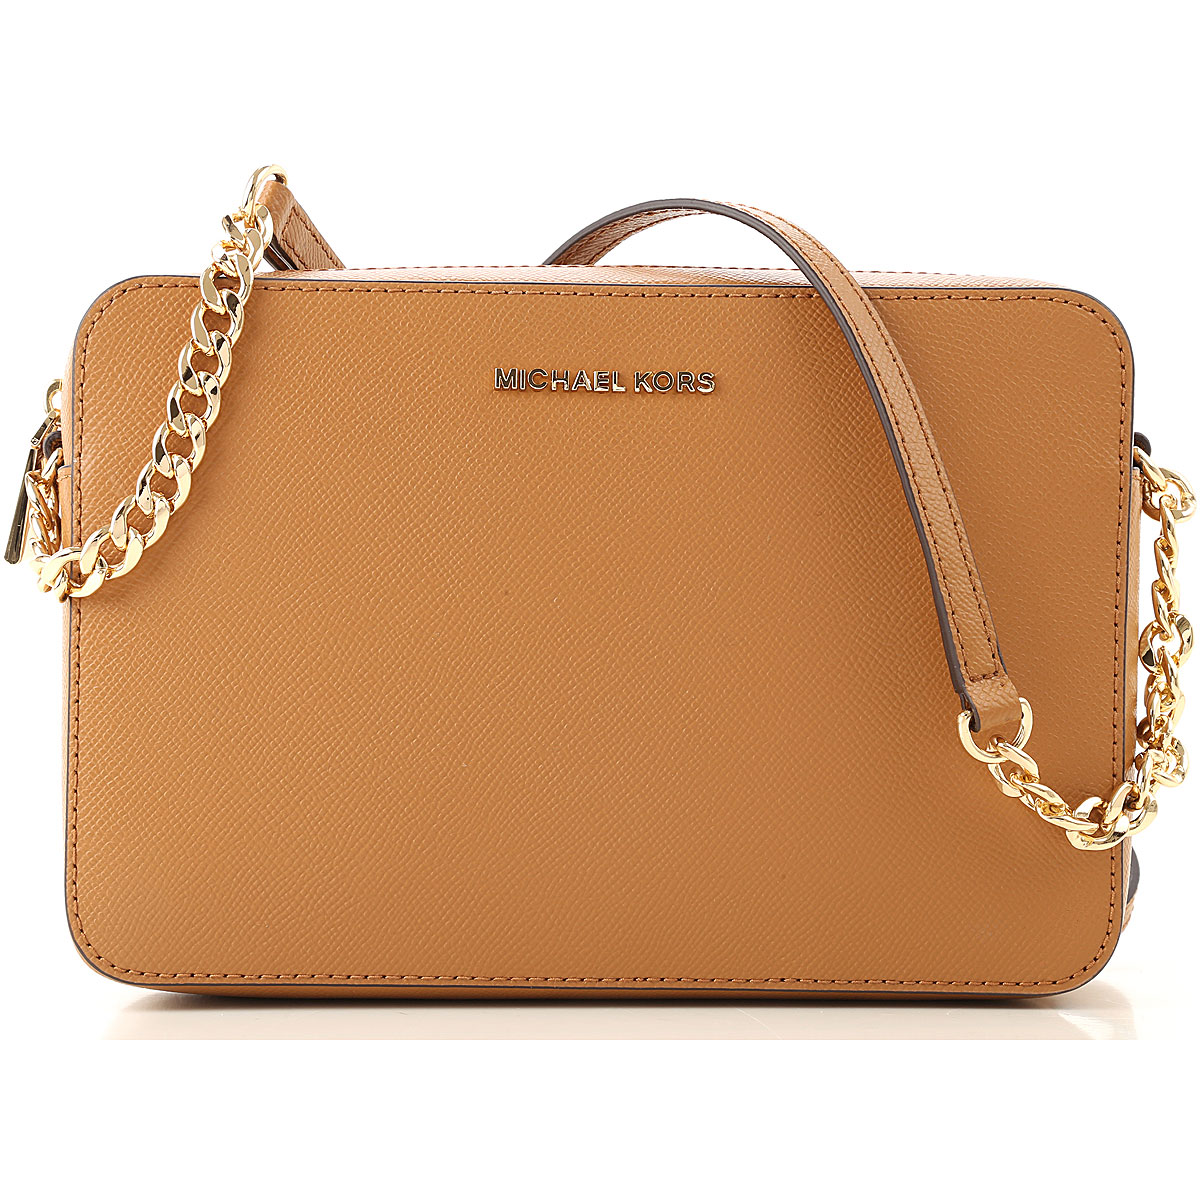 Handbags Michael Kors, Style code: 32s4gtvc3l-203-acorn